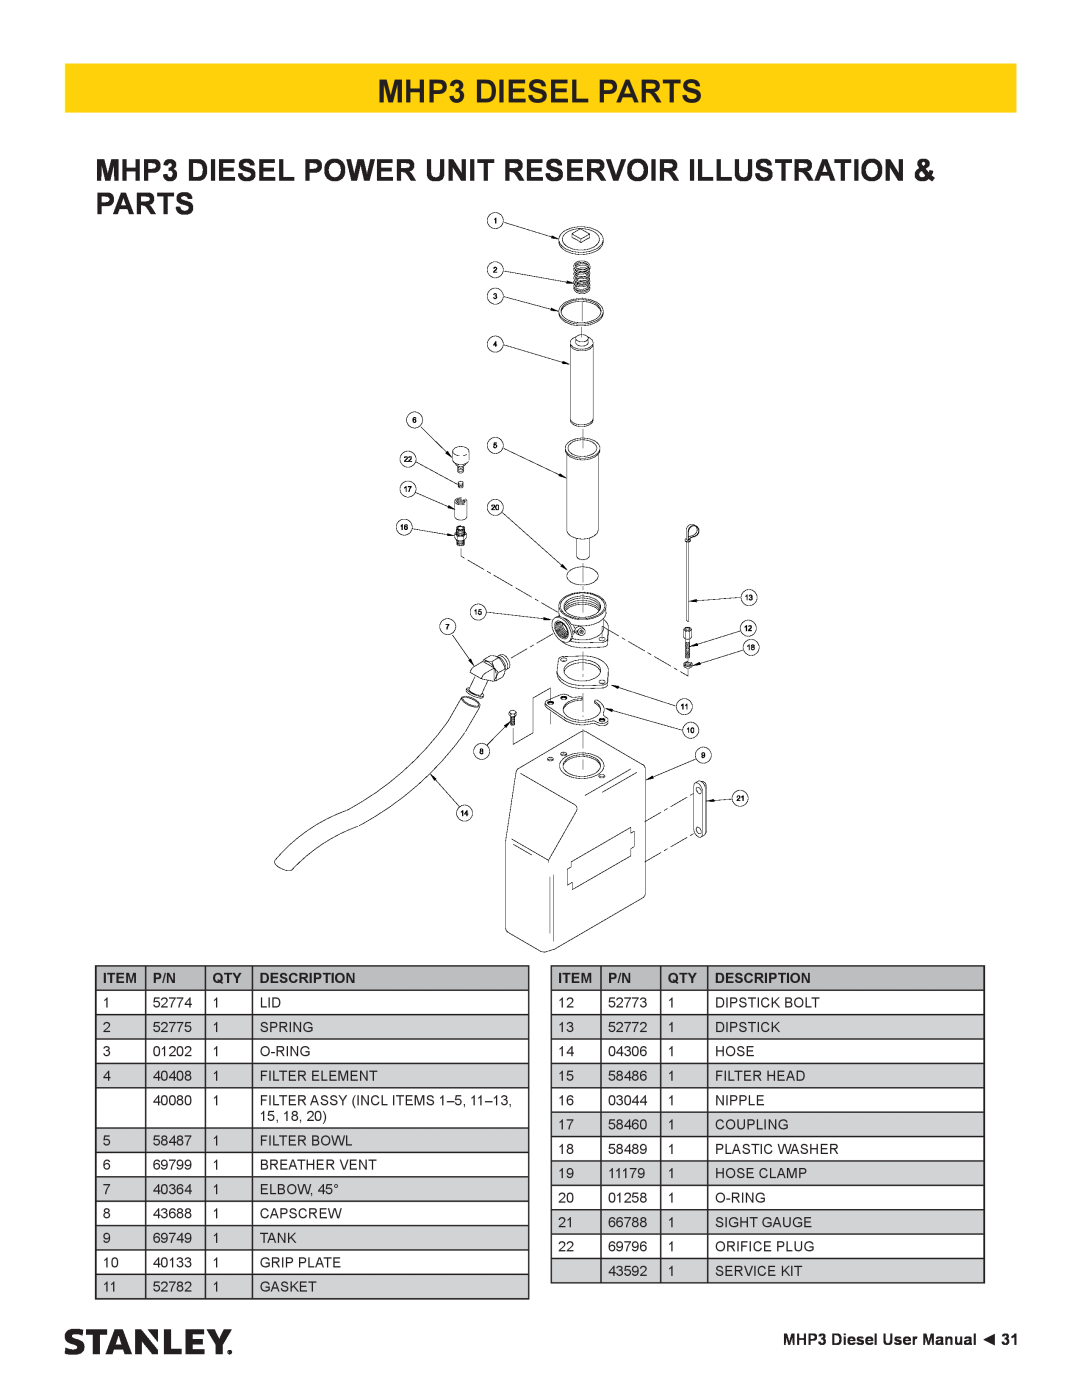 Stanley Black & Decker manual MHP3 DIESEL PARTS, MHP3 DIESEL POWER UNIT RESERVOIR ILLUSTRATION & PARTS 